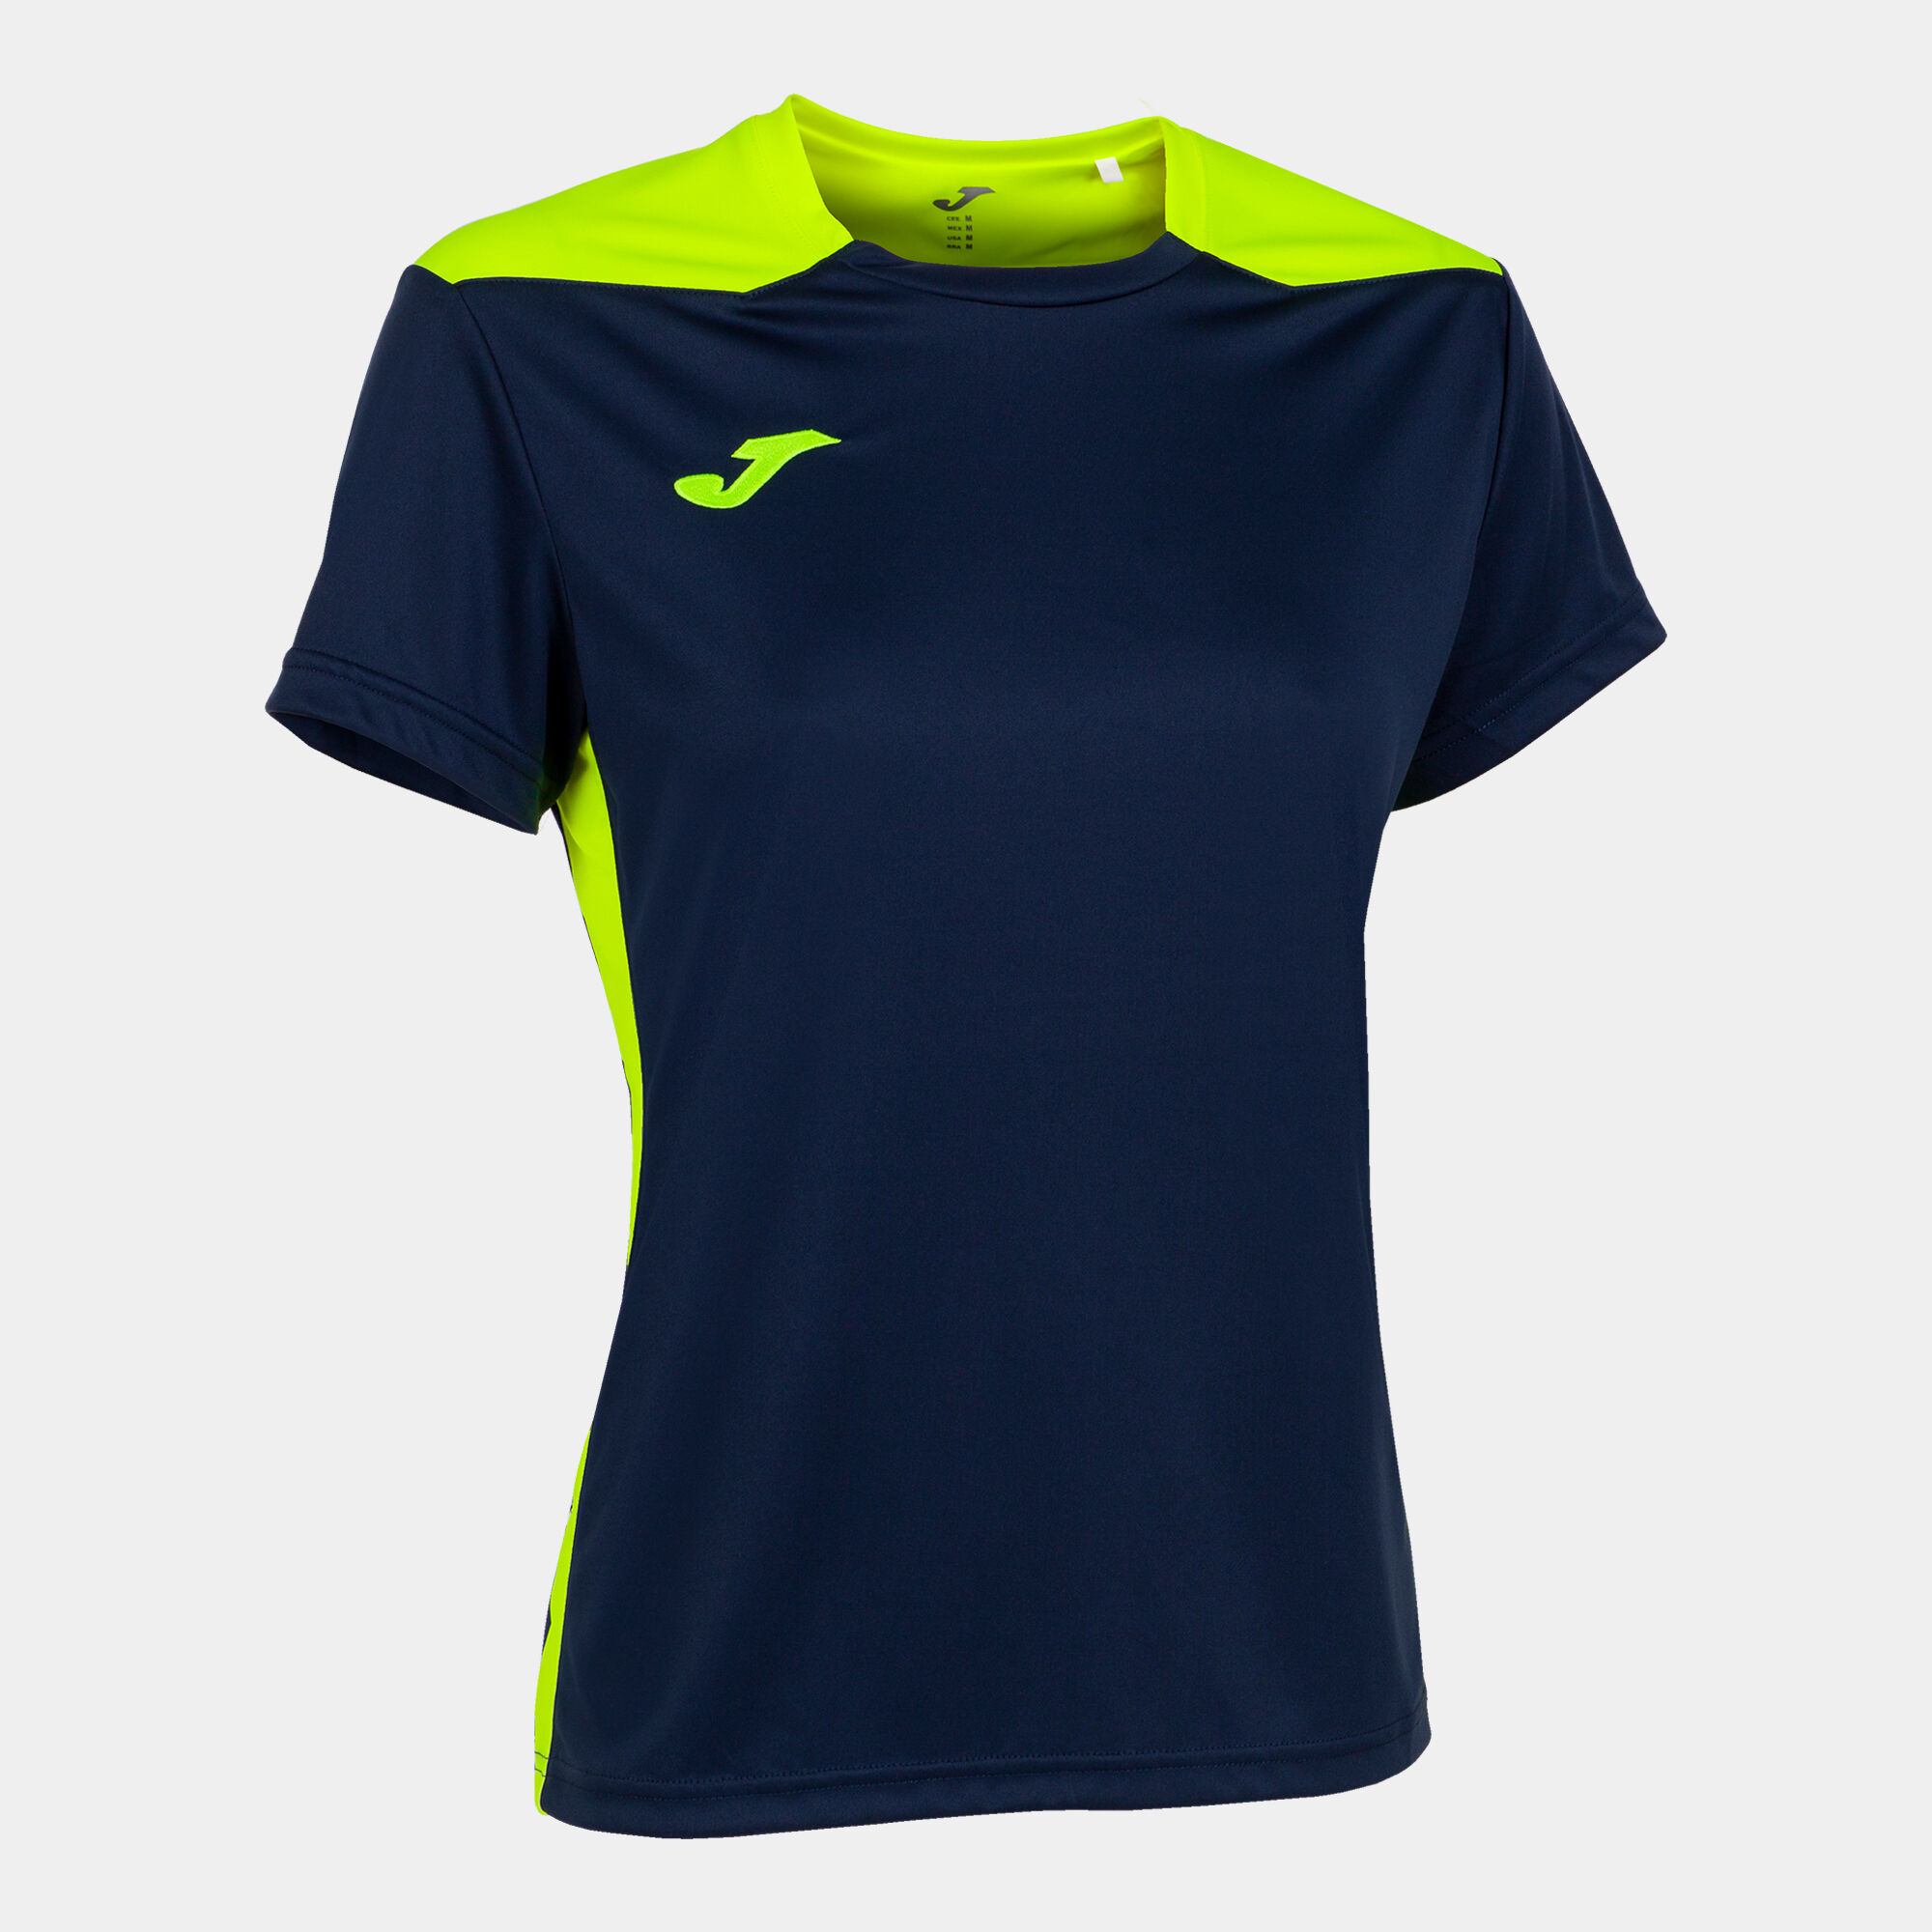 Shirt short sleeve woman Championship VI navy blue fluorescent yellow